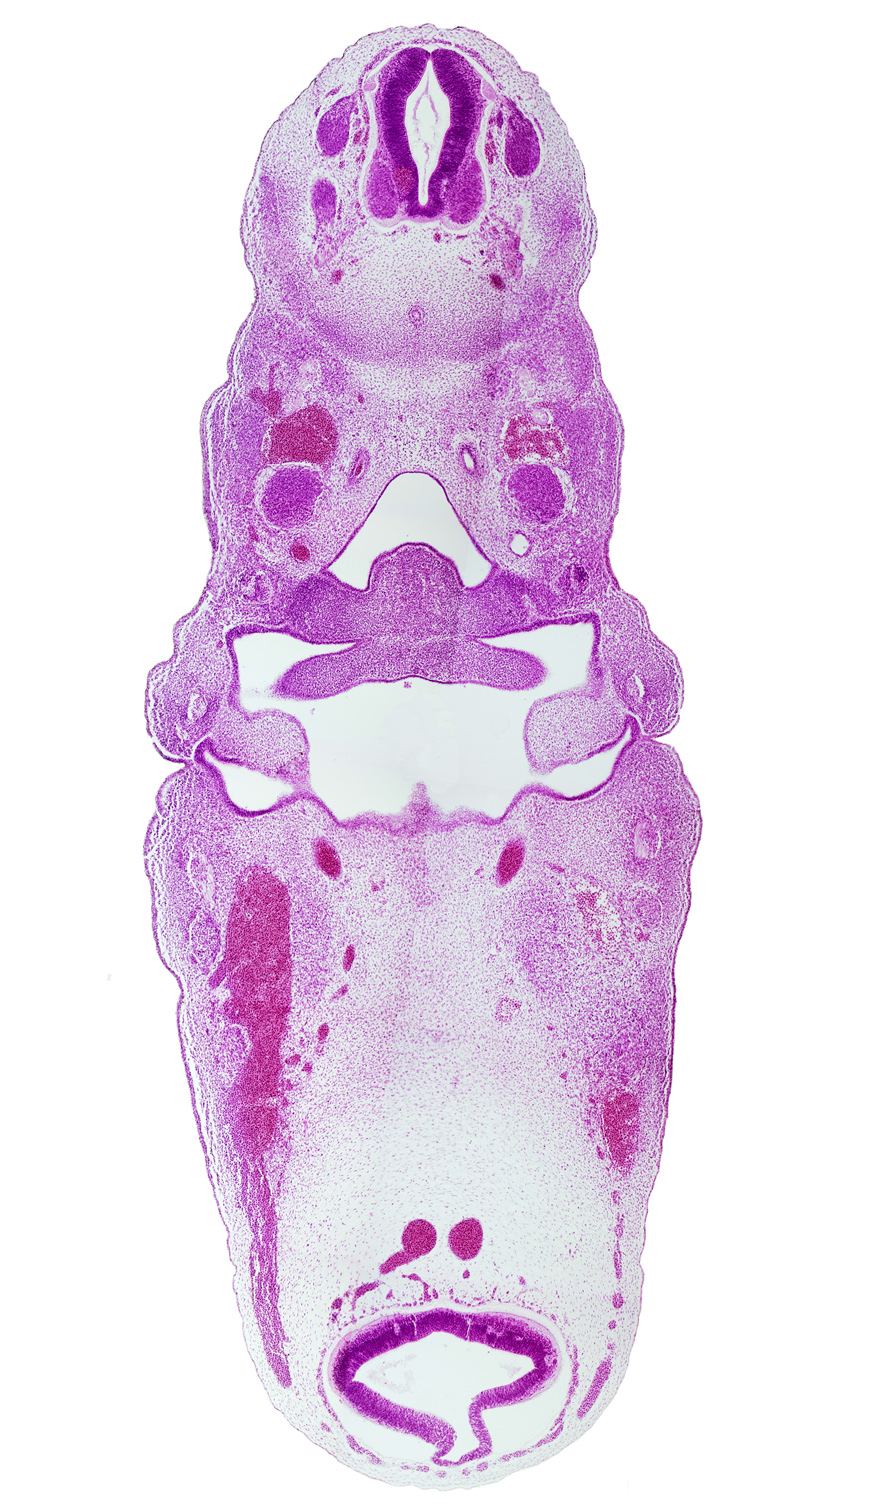 C-3 spinal ganglion, aortic arch 3, central canal, cephalic end of notochord, dorsal aorta, facial nerve (CN VII), foramen cecum of tongue, glossopharyngeal nerve (CN IX), hypopharyngeal eminence of tongue, inferior ganglion of vagus nerve (CN X), intermediate zone, internal carotid artery, junction of anterior dural venous plexus and primordial maxillary vein, laryngeal pharynx, mandibular nerve (CN V₃), marginal zone, maxillary nerve (CN V₂), mesencephalon (M2), nasopharynx, notochord, origin of mesencephalon artery, pharyngeal groove 1, pharyngeal pouch 1, pharyngeal pouch 2, posterior cerebral artery, sclerotome, sulcus limitans, ventral root, ventricular zone, vertebral artery